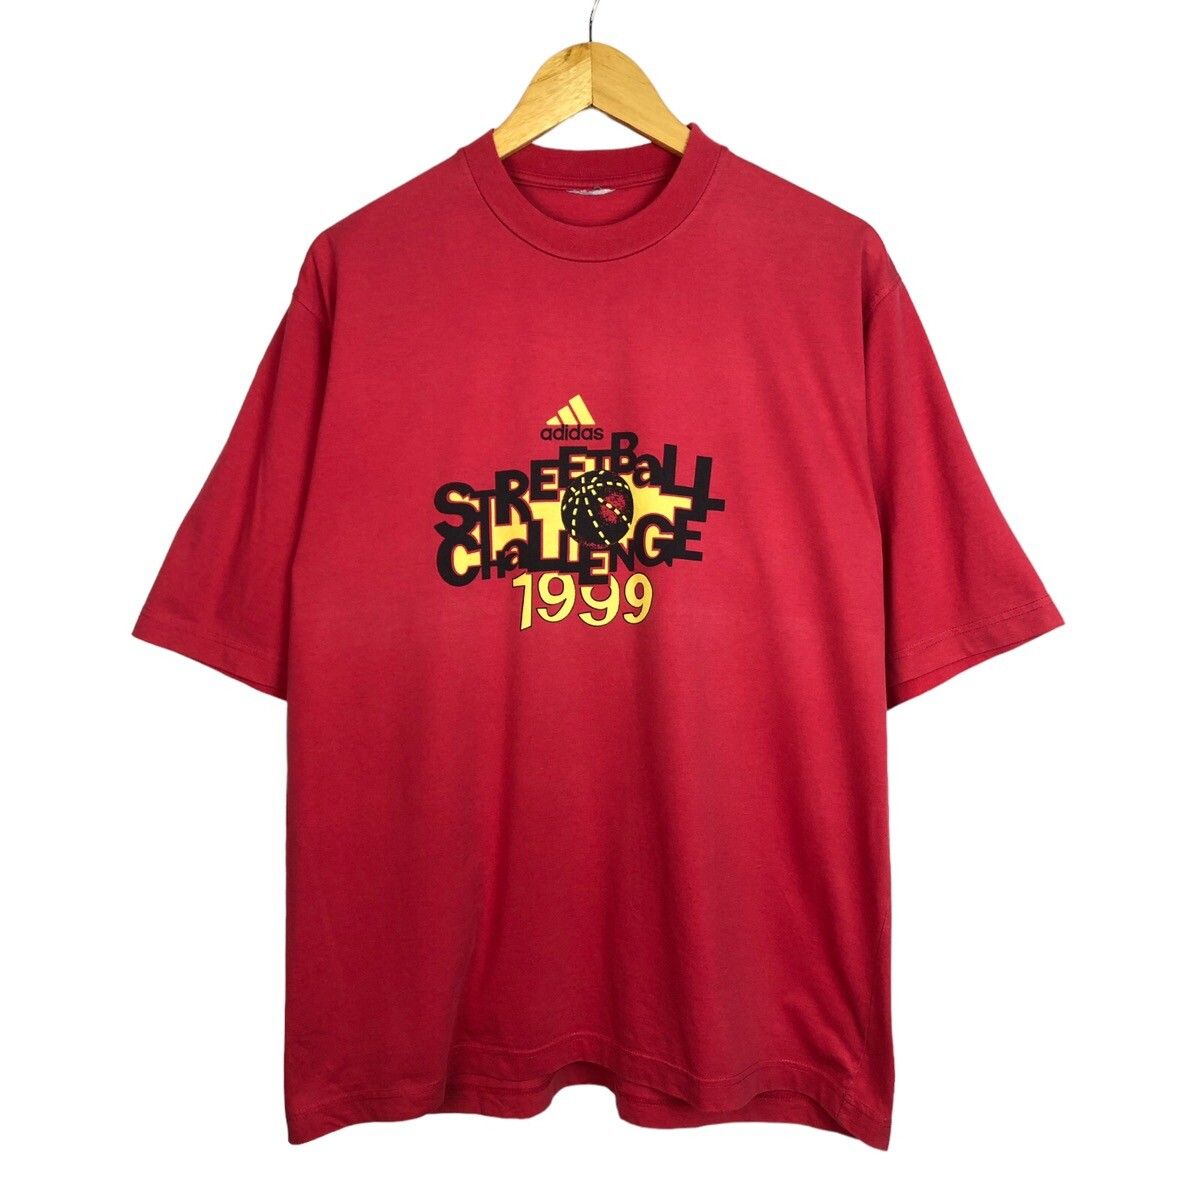 Adidas Vintage t-shirt Adidas Streetball Challenge 1999s original Size US XL / EU 56 / 4 - 1 Preview